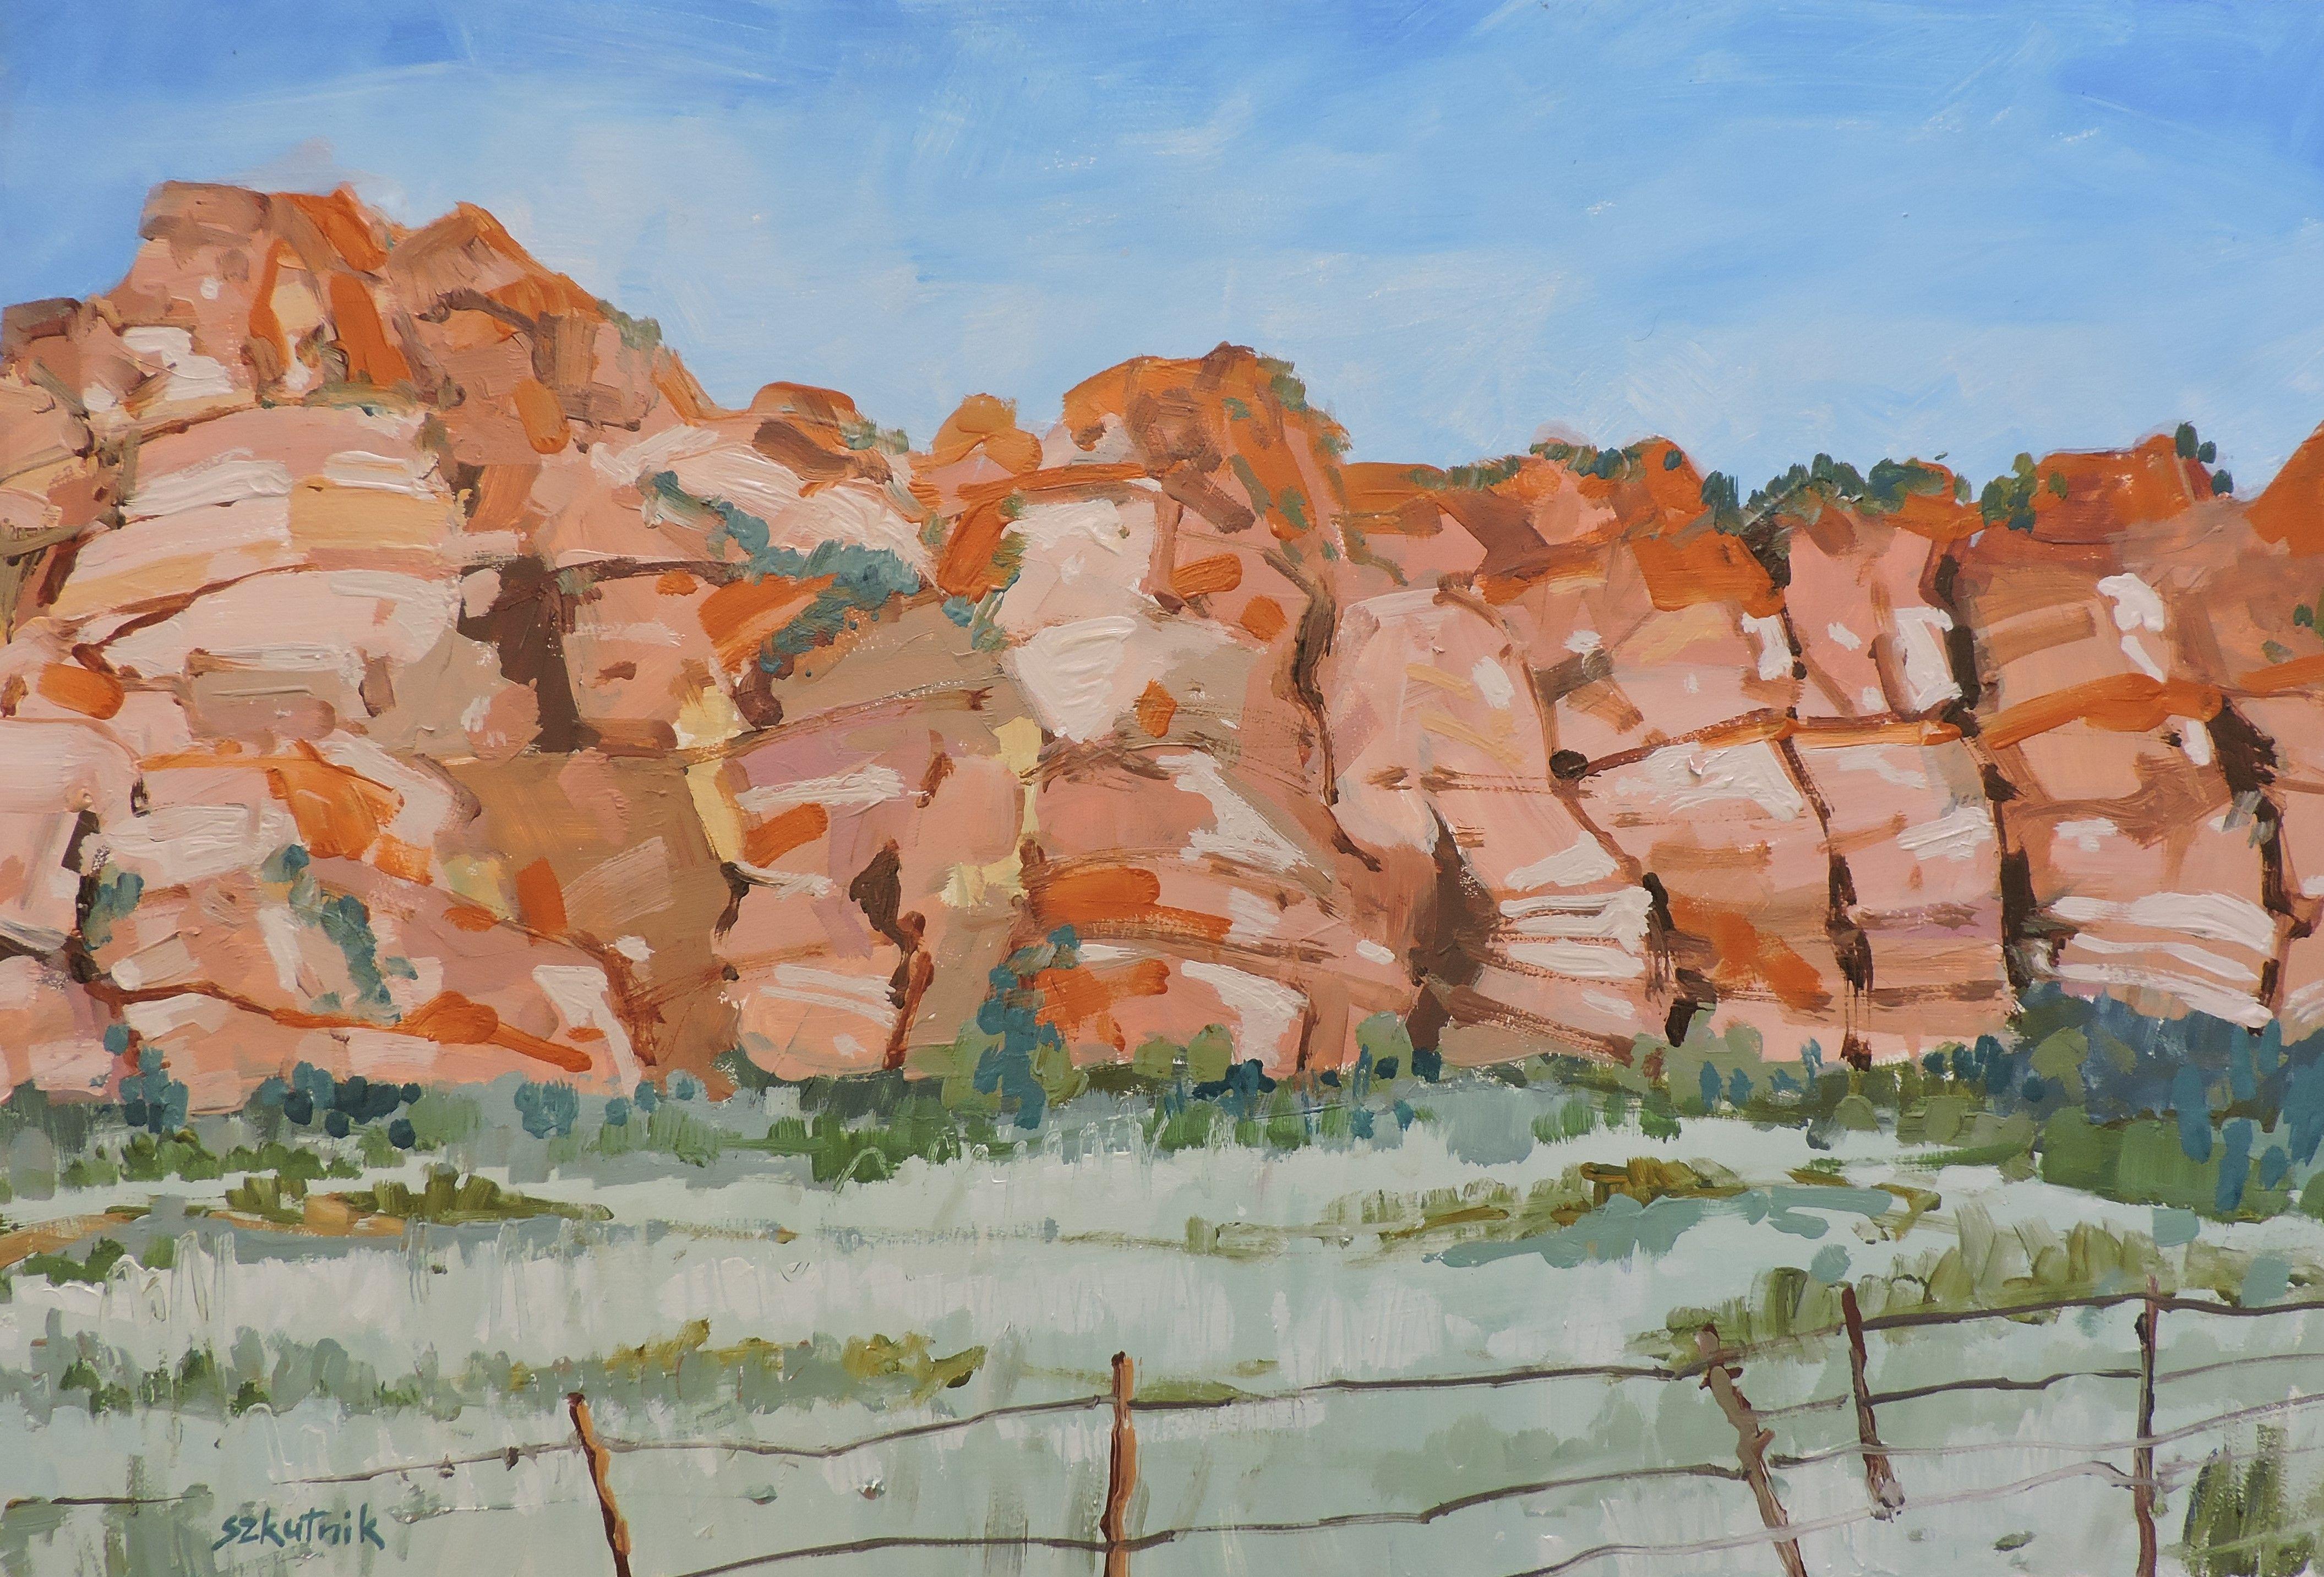 Richard Szkutnik Landscape Painting - Looking West, Painting, Oil on Other